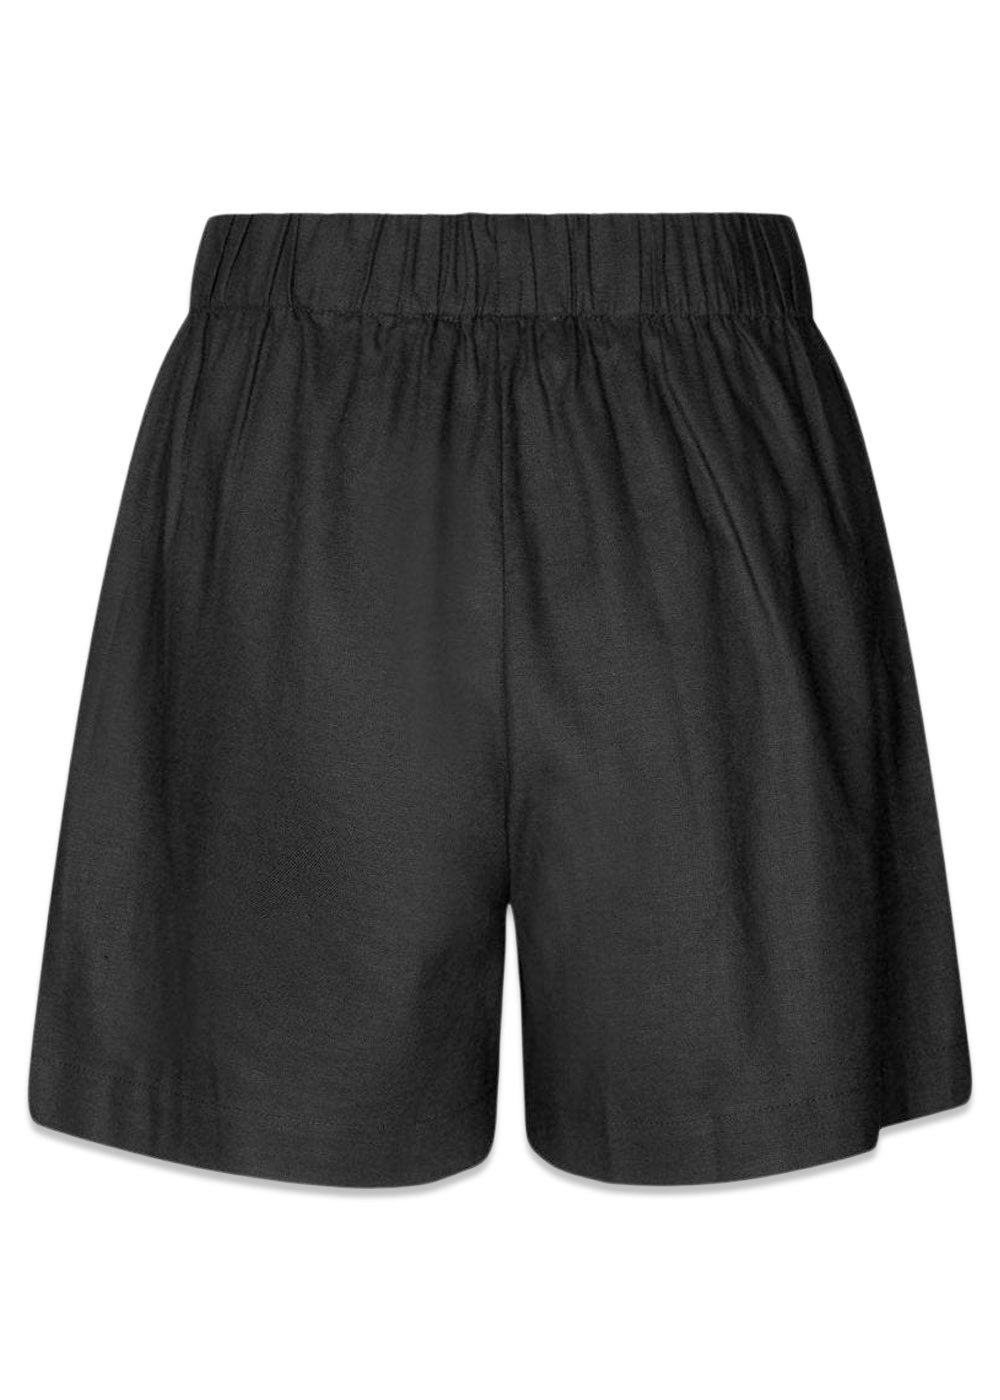 DarrelMD shorts - Black